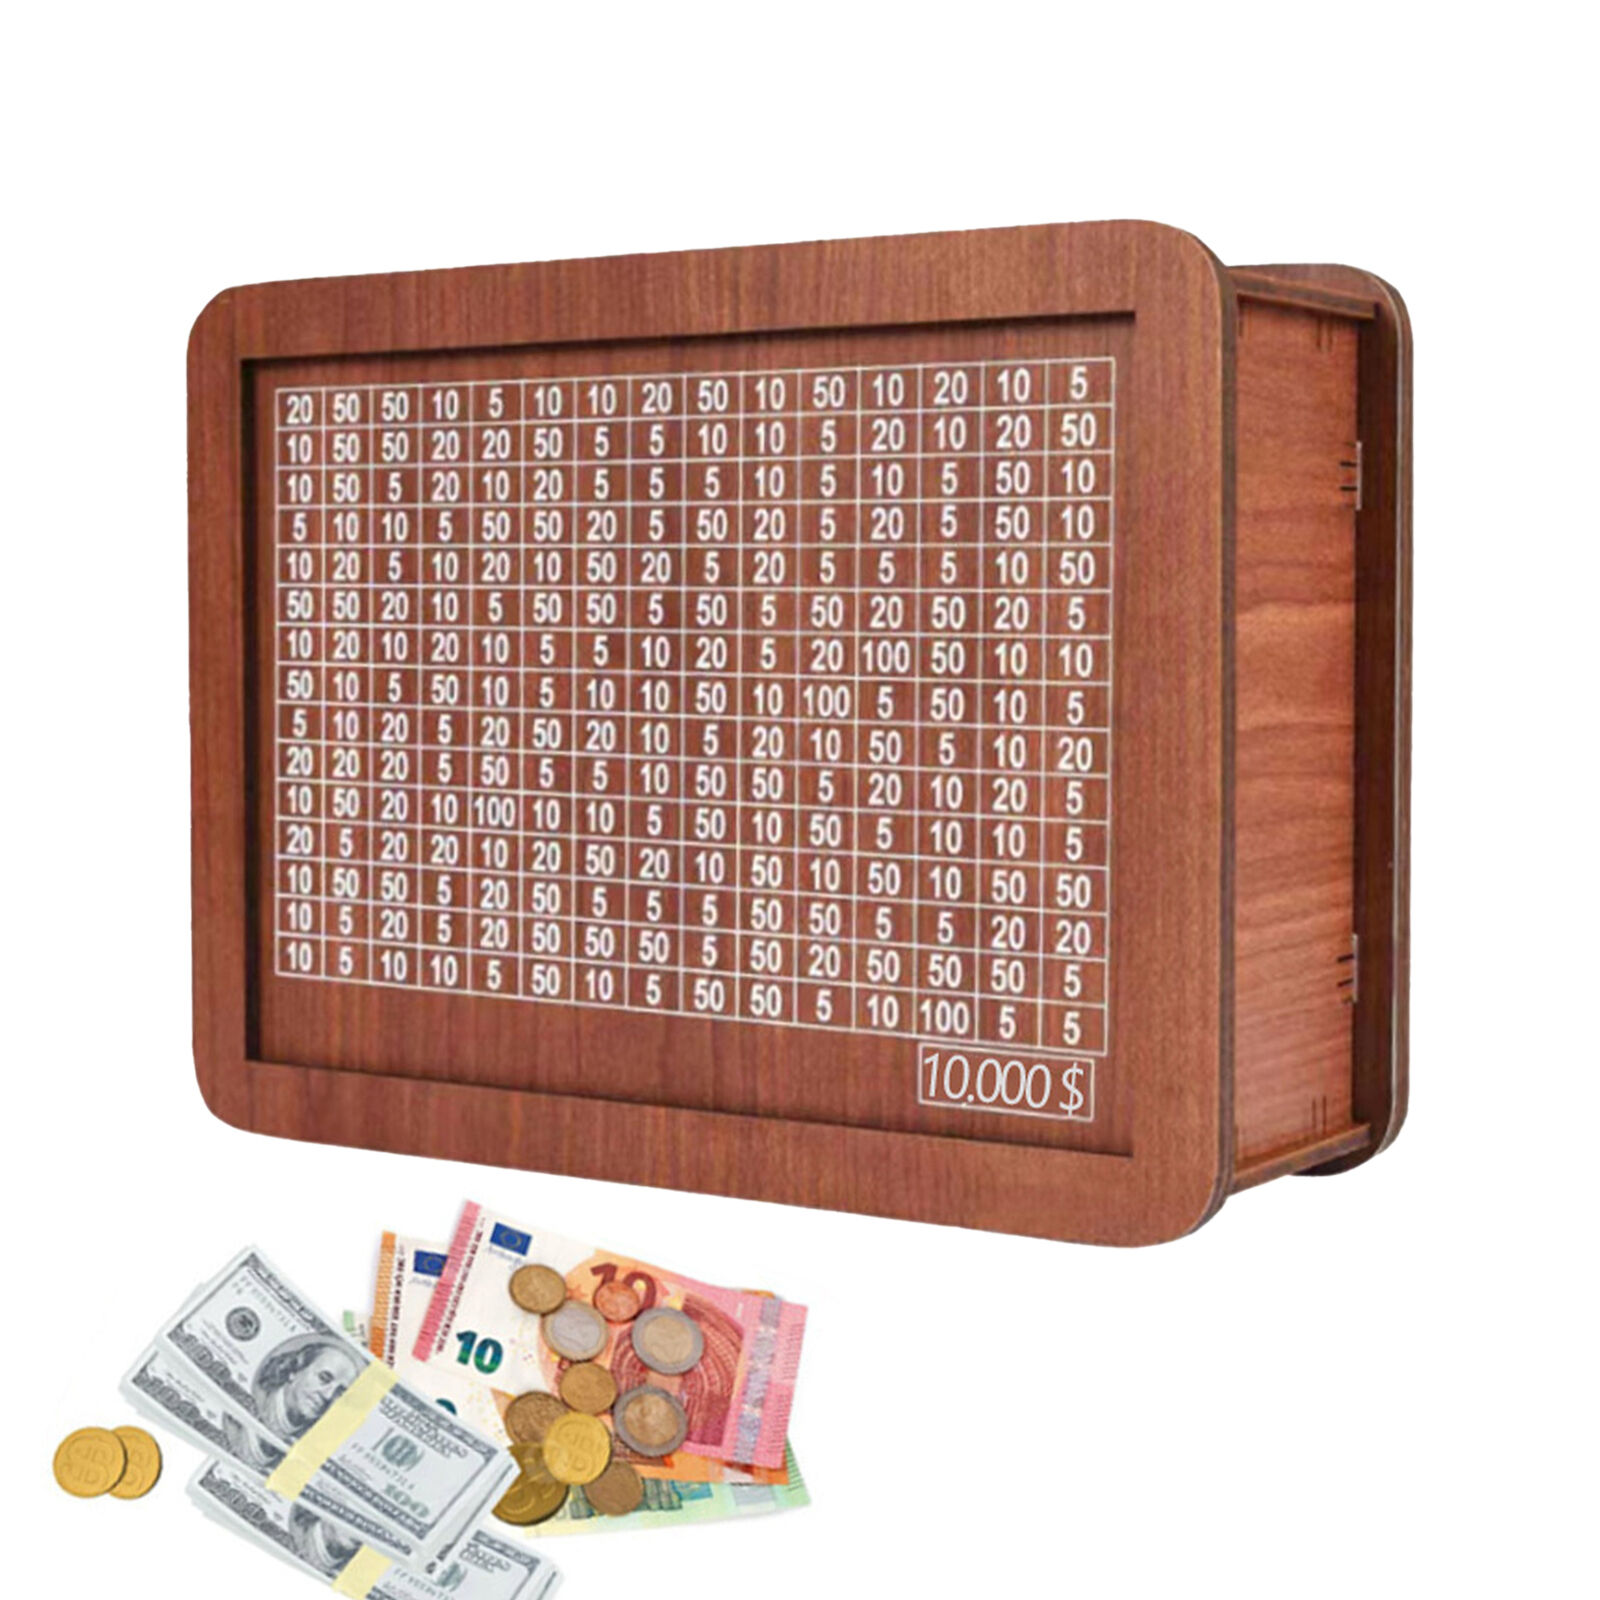 Wooden Piggy Bank Cash Box Money Bank With Counter Money Saving Challenge Box